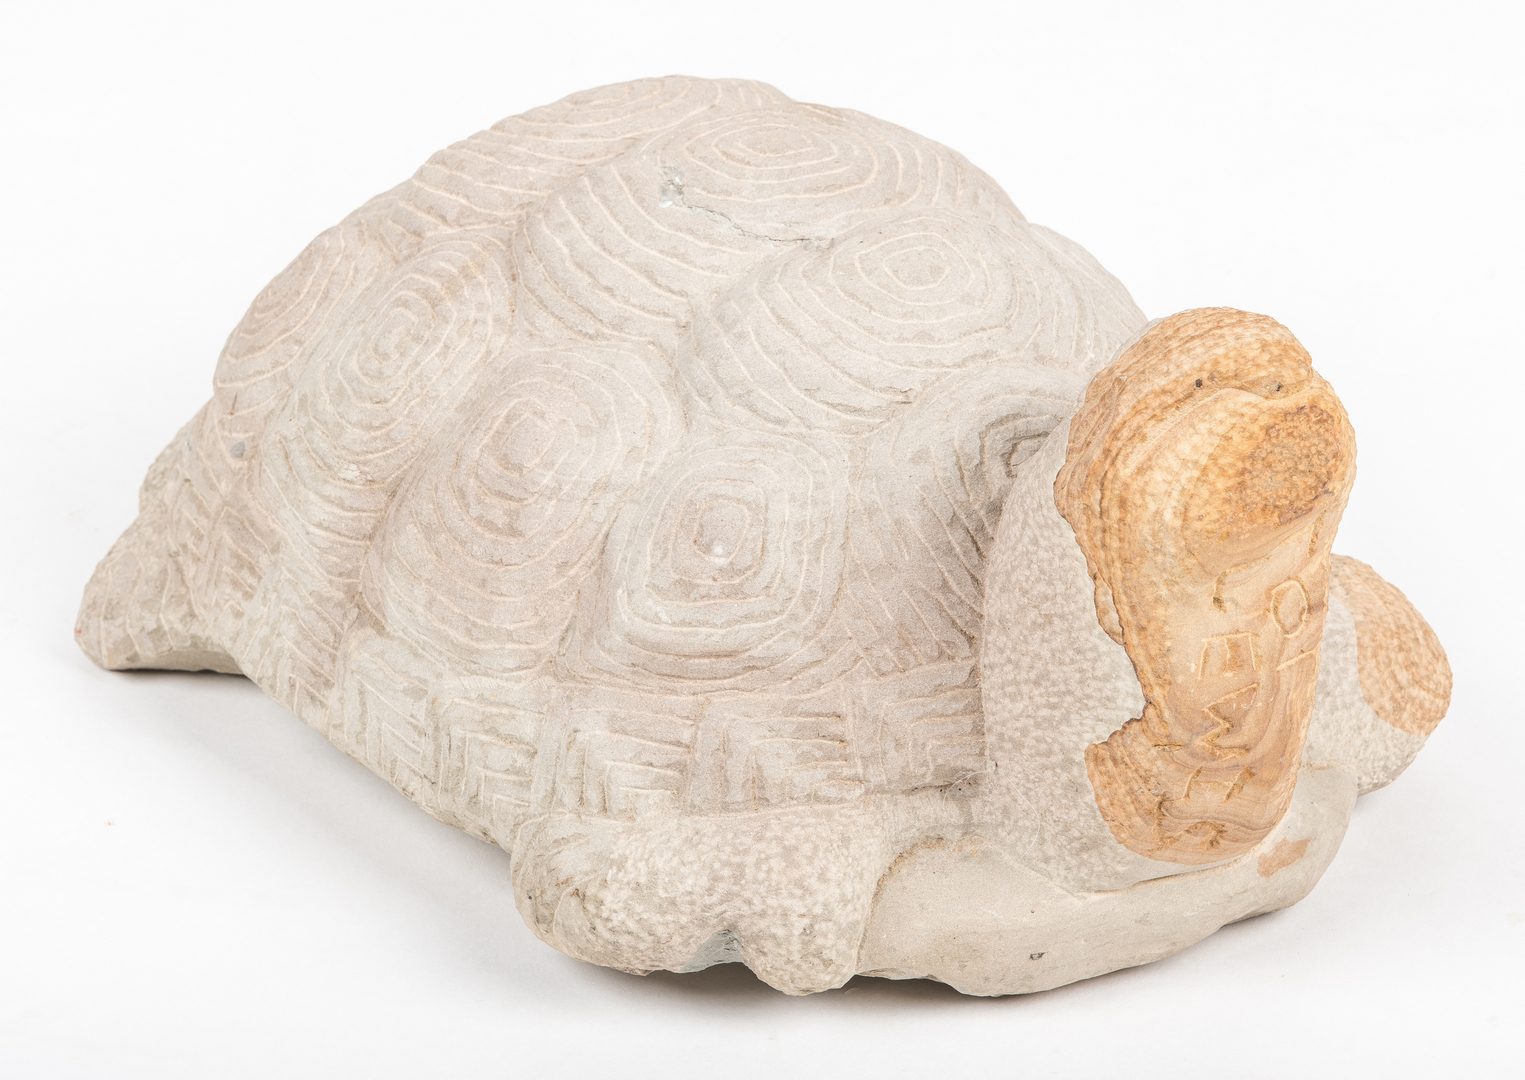 Lot 716: Tim Lewis Carved Limestone Turtle Sculpture